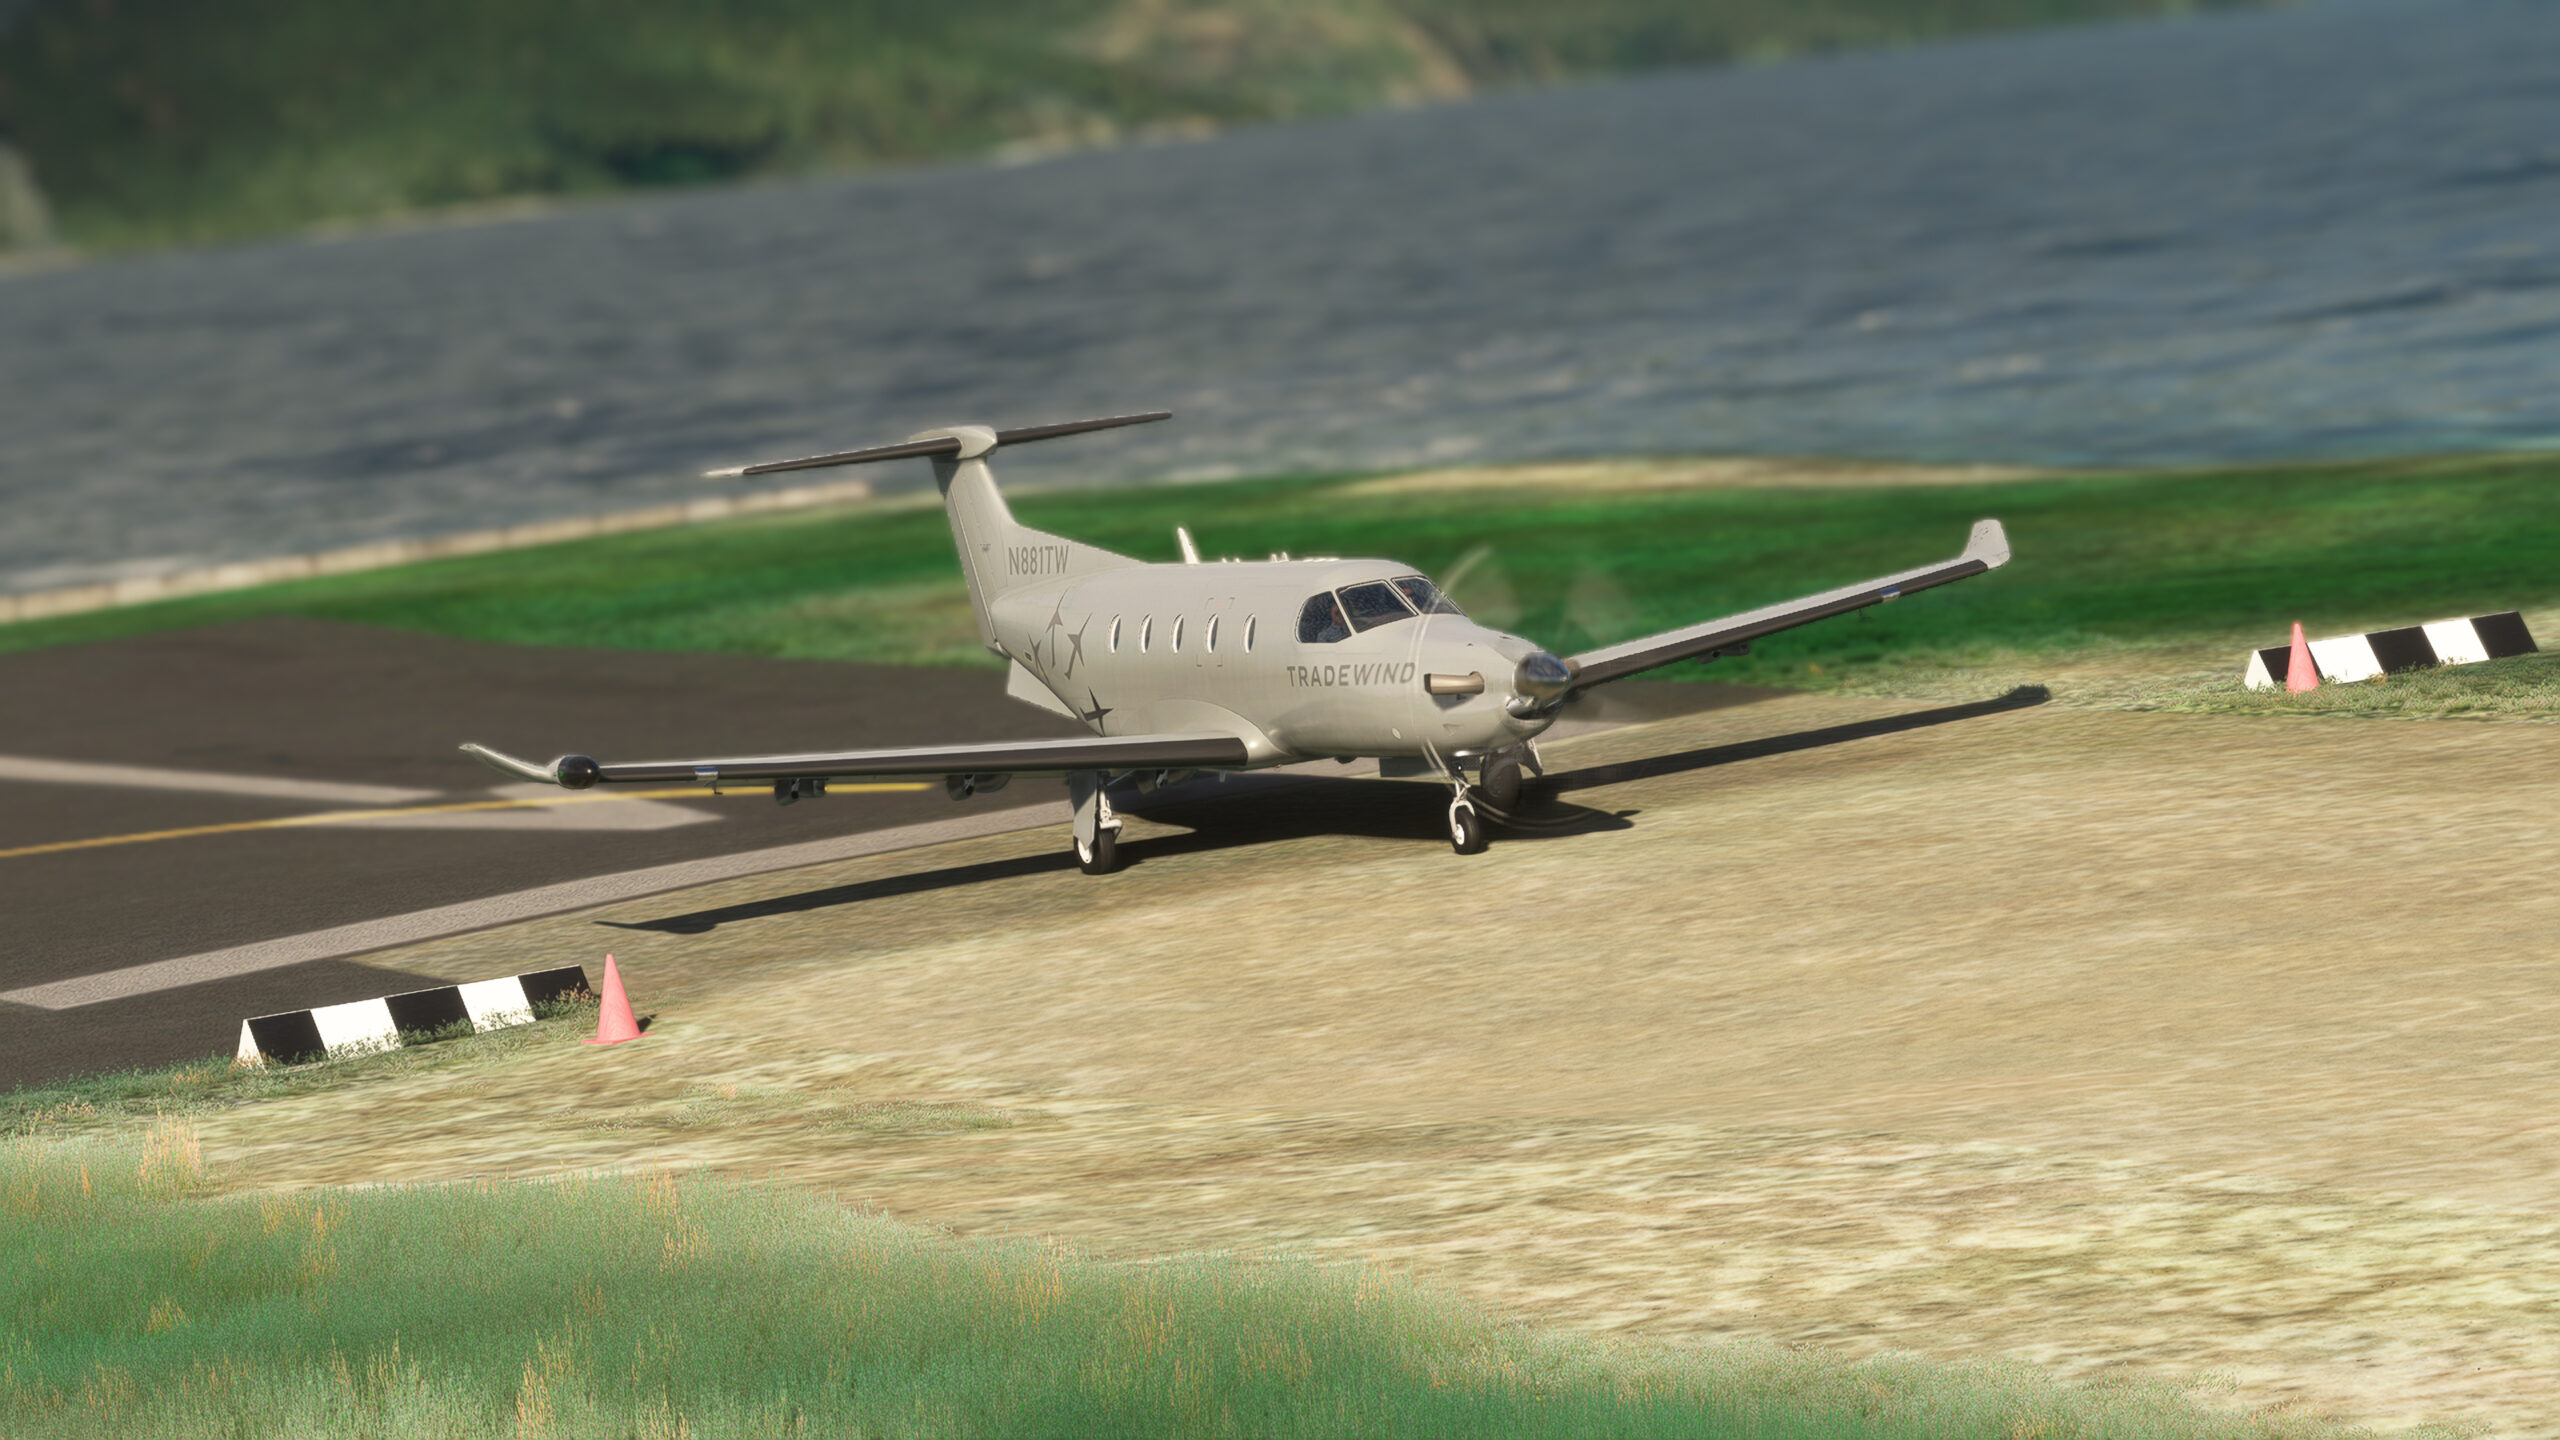 Microsoft Flight Simulator Introduces the Carenado PC12 into the